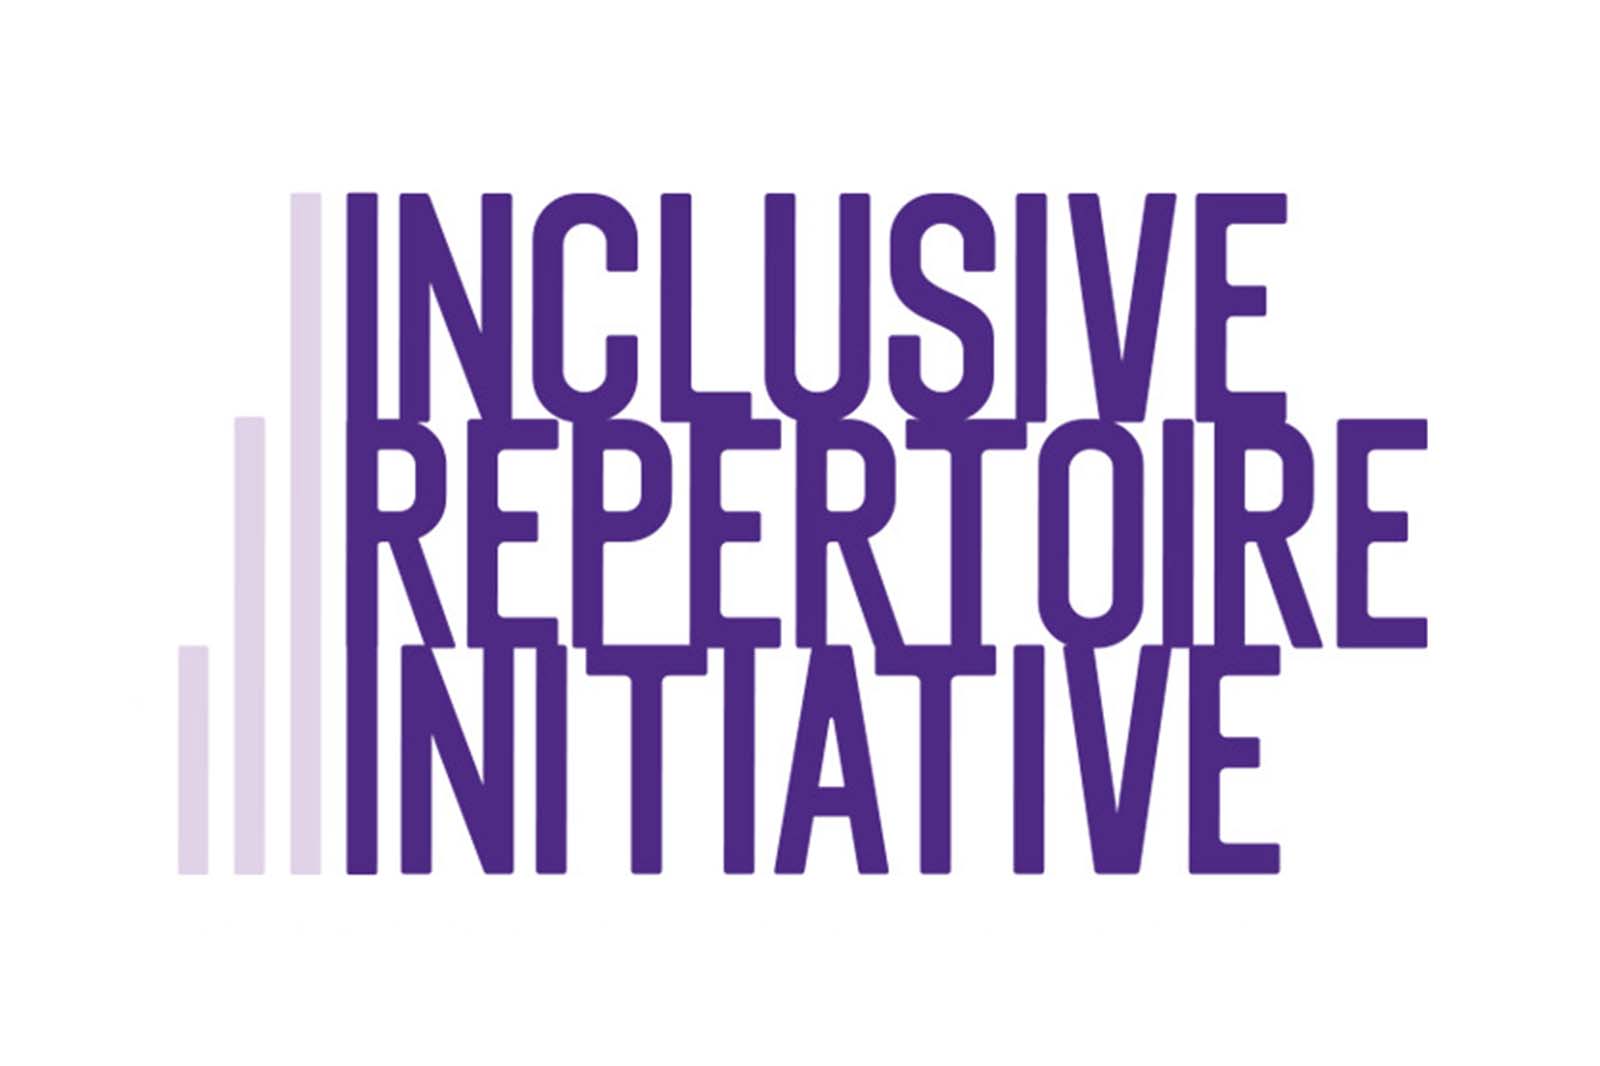 Inclusive Repertoire Initiative